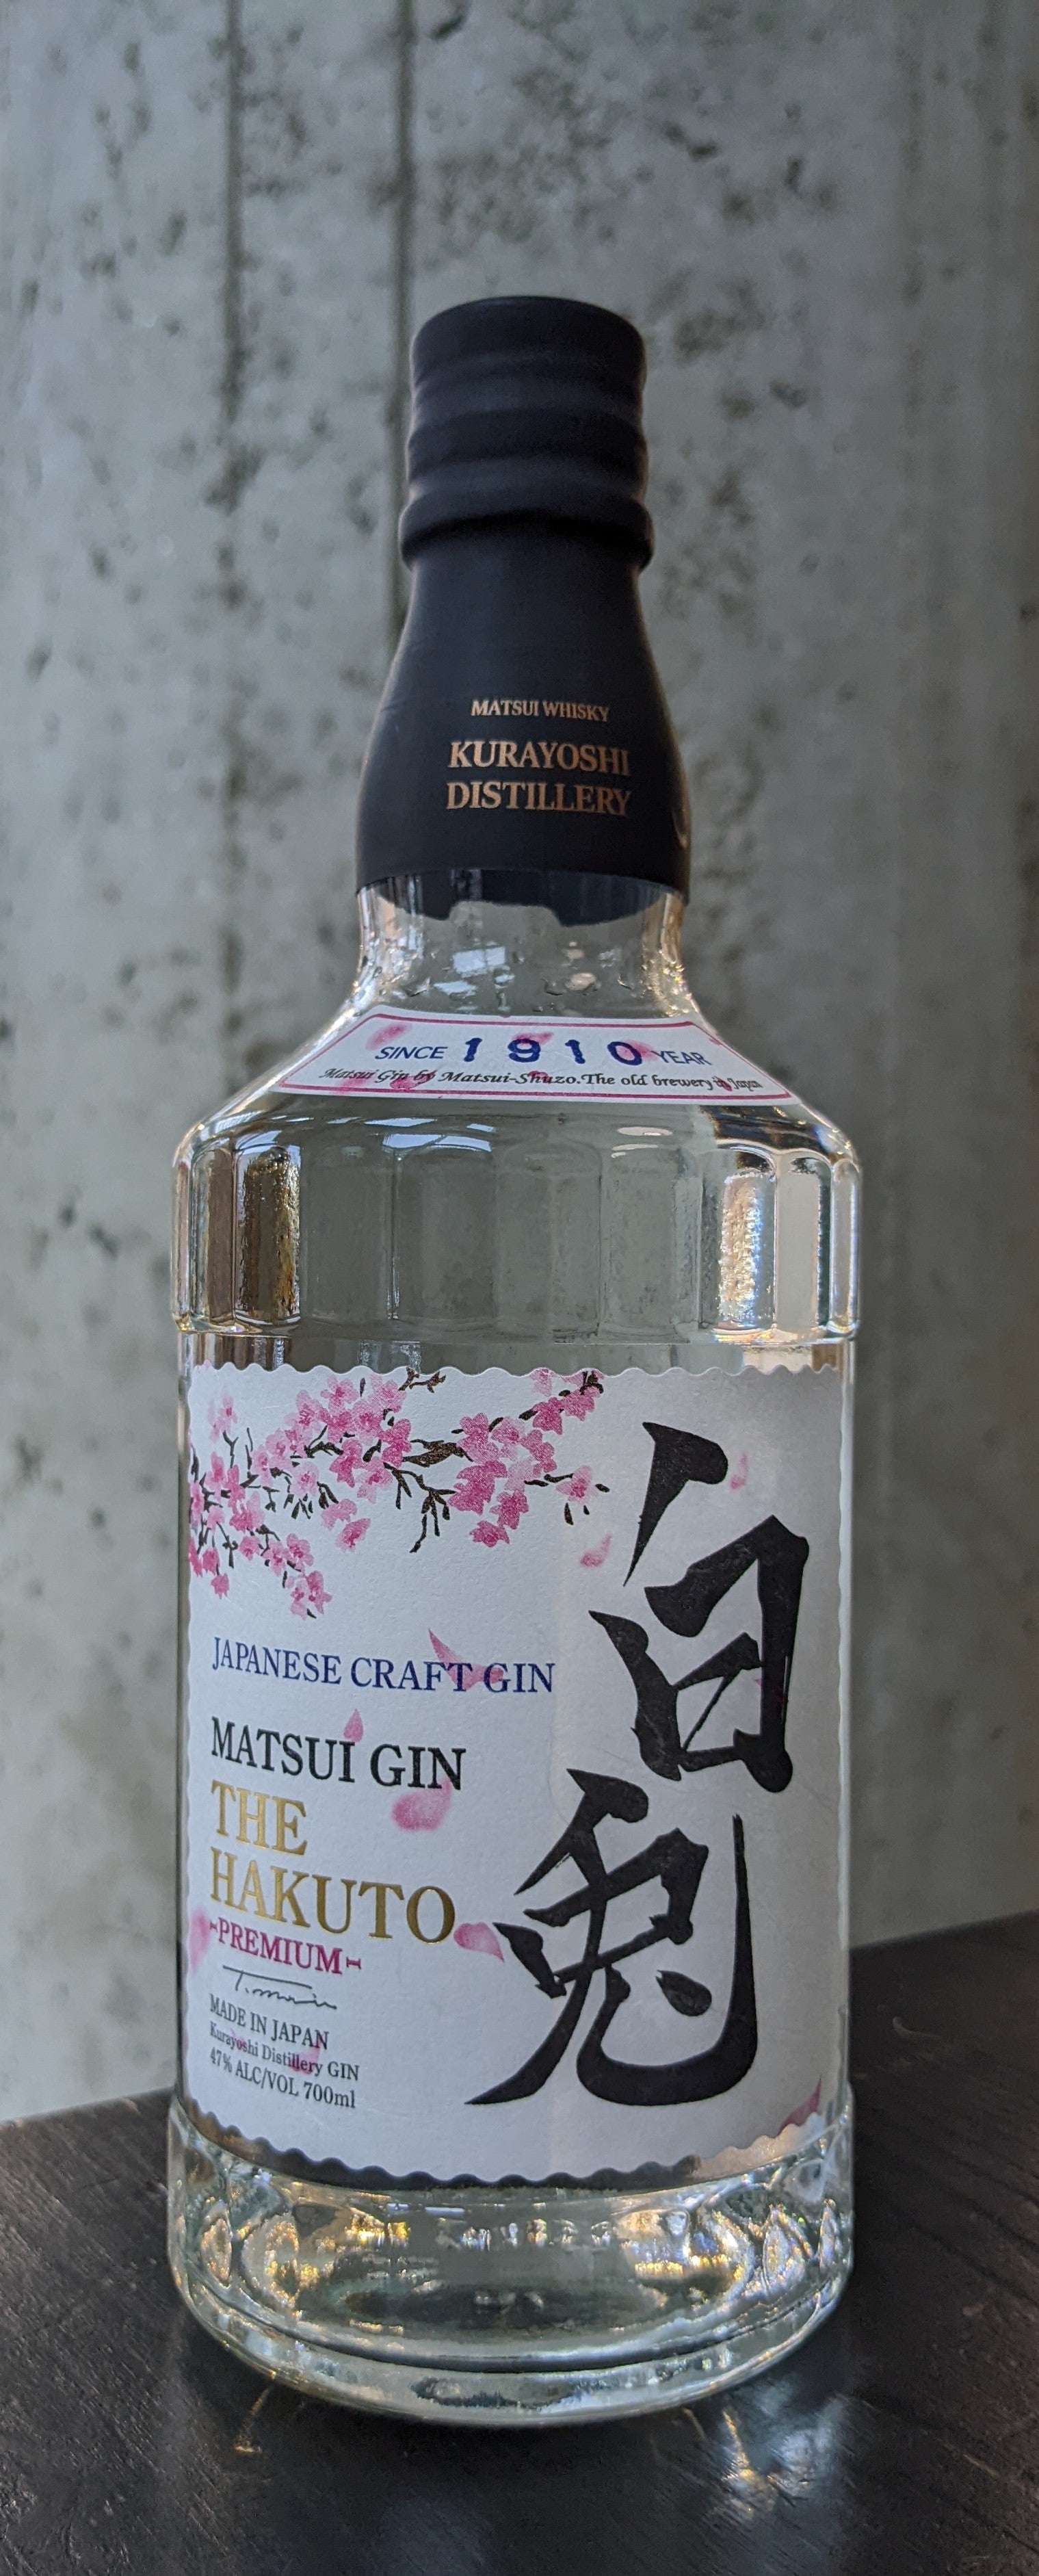 Matsui "The Hakuto" Premium Gin